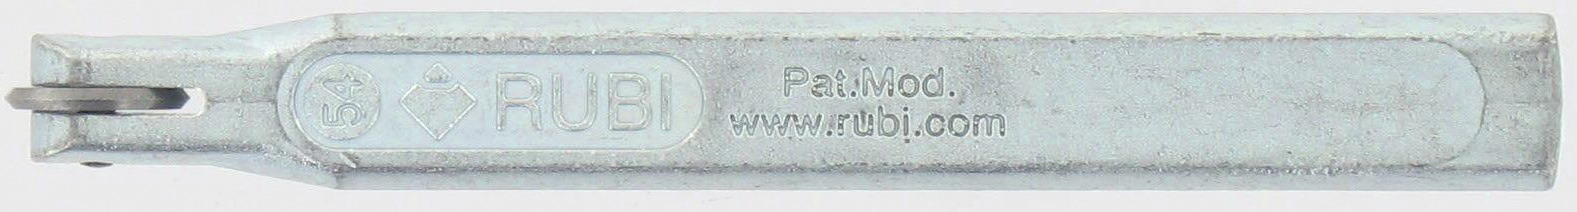 Molette de rechange TR-TS-TF Rubi - Diamètre 10 mm